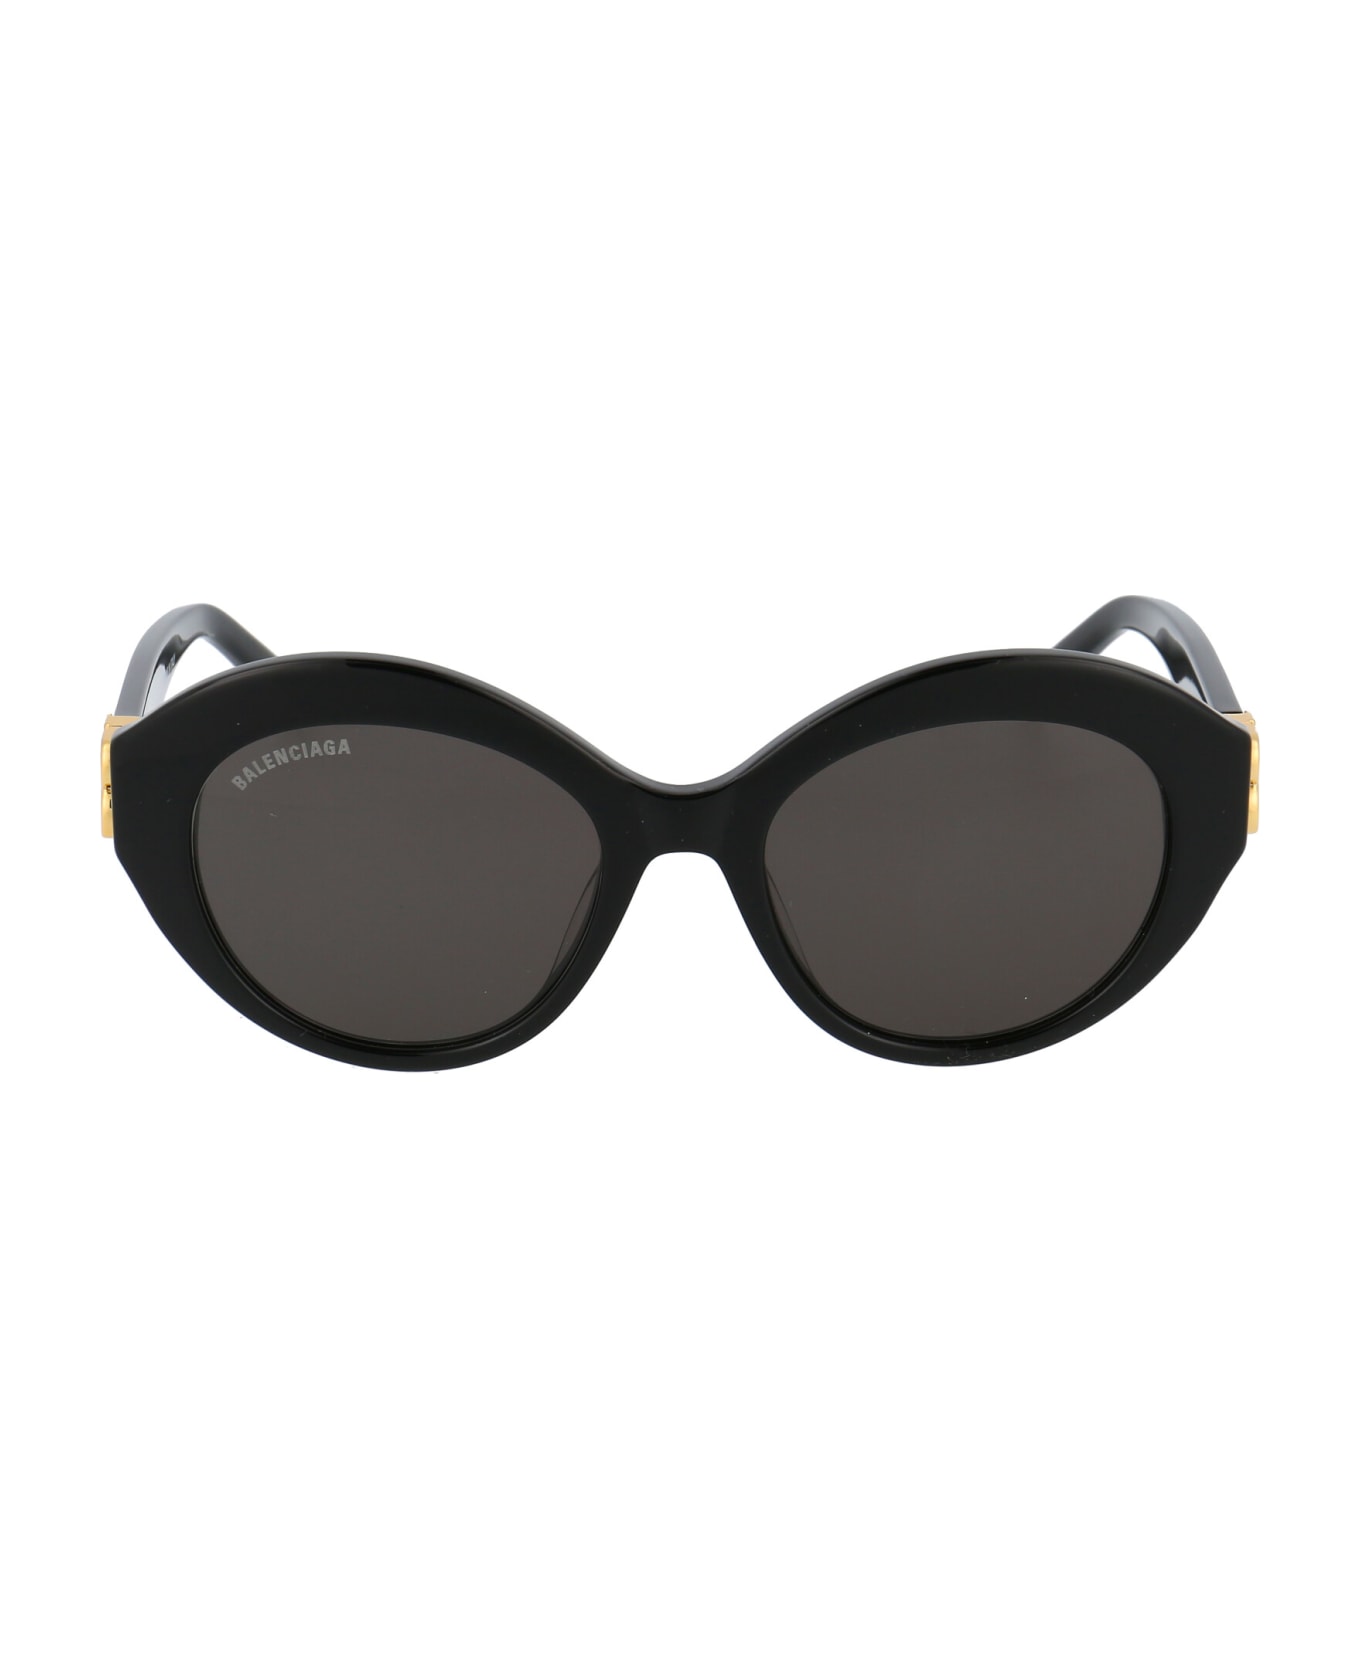 Balenciaga Eyewear Bb0133s Sunglasses - 001 BLACK GOLD GREY